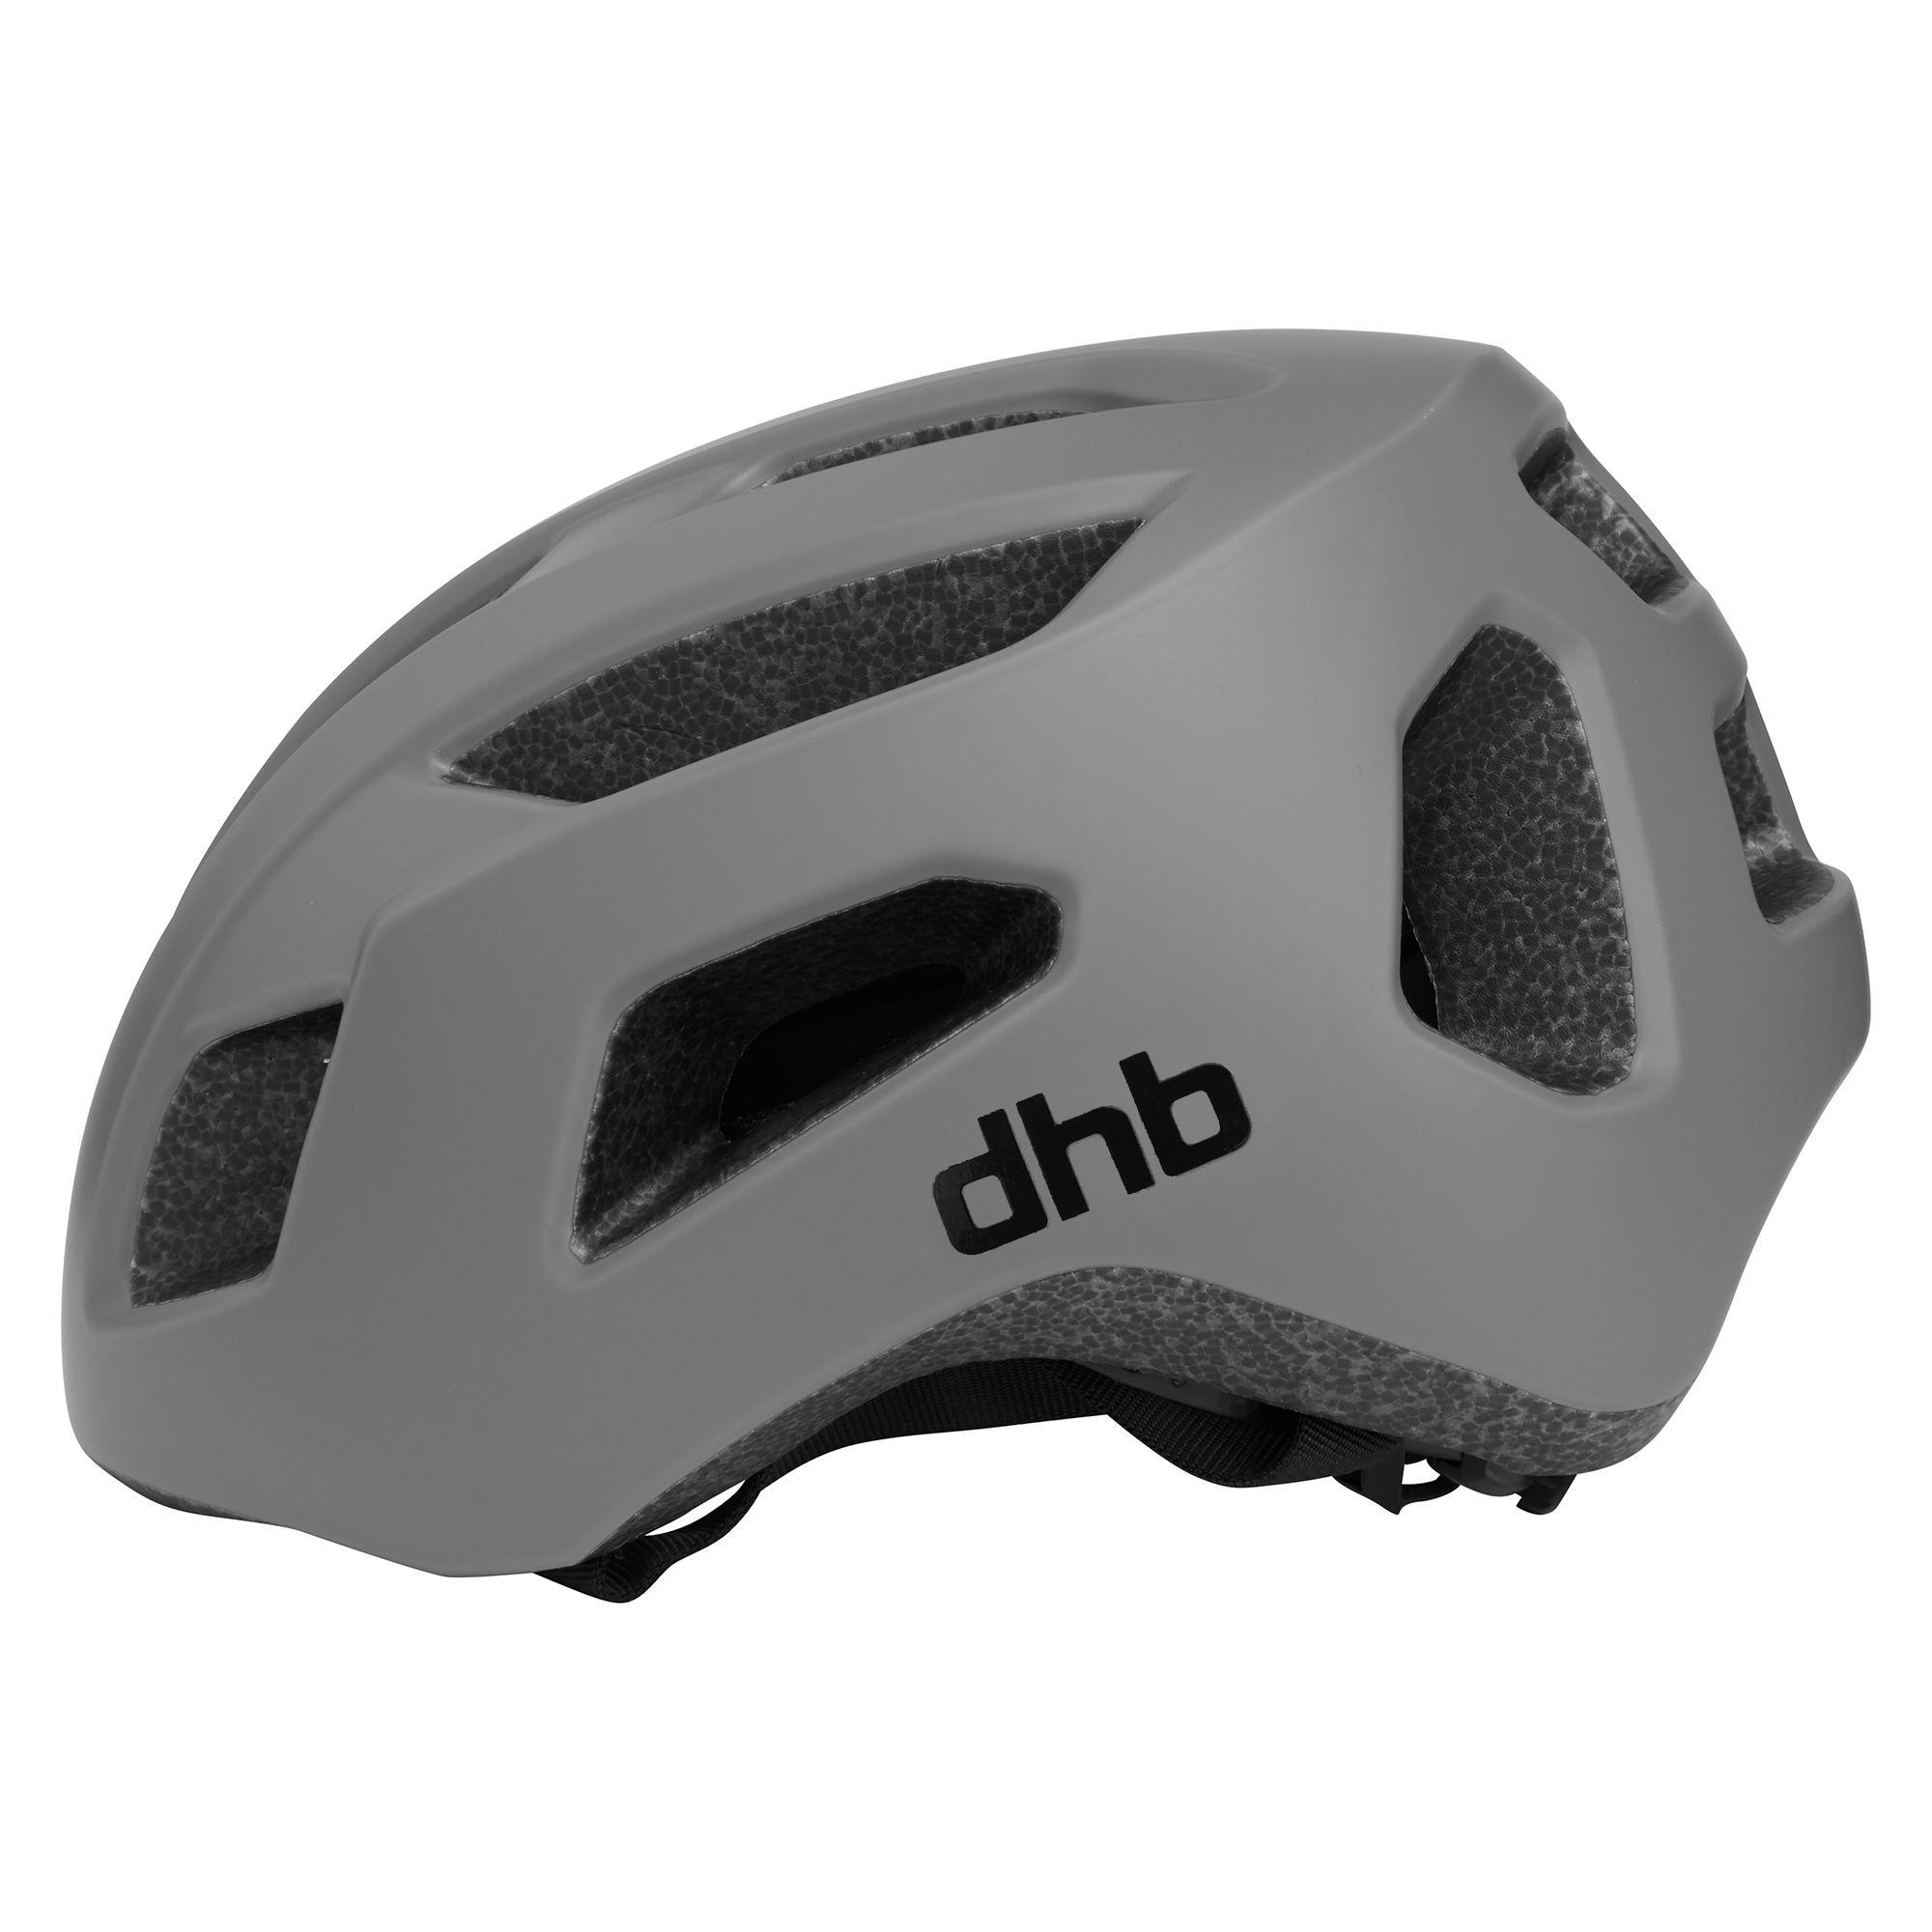 Dhb Trail Helmet - Stormy Weather